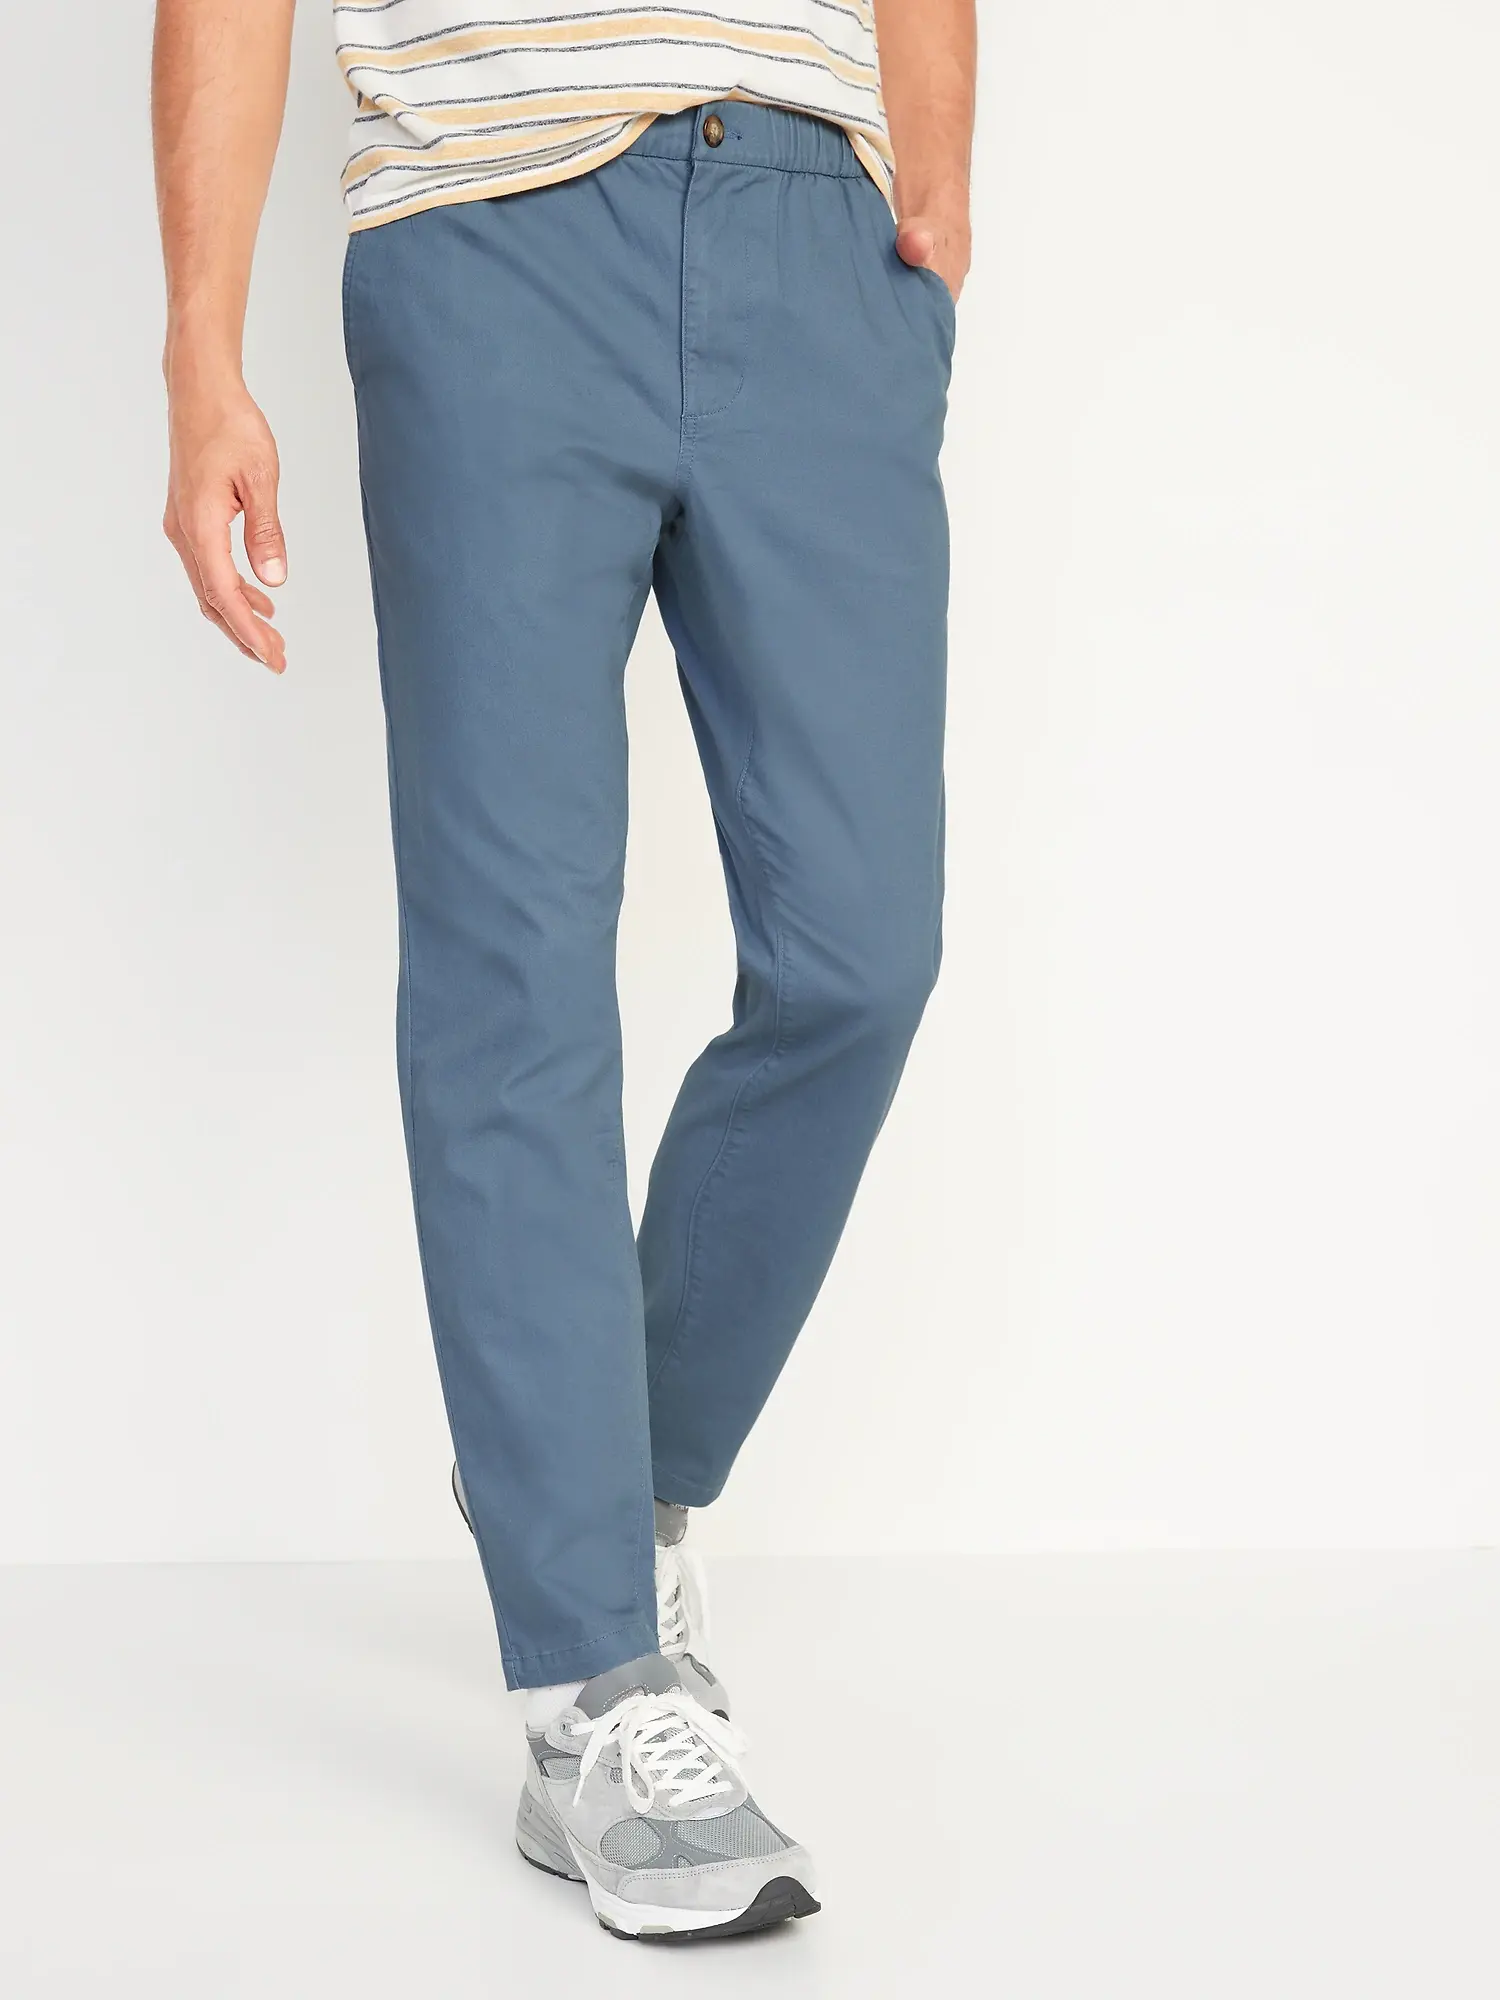 Old Navy Slim Taper Built-In Flex Pull-On Chino Pants for Men blue. 1